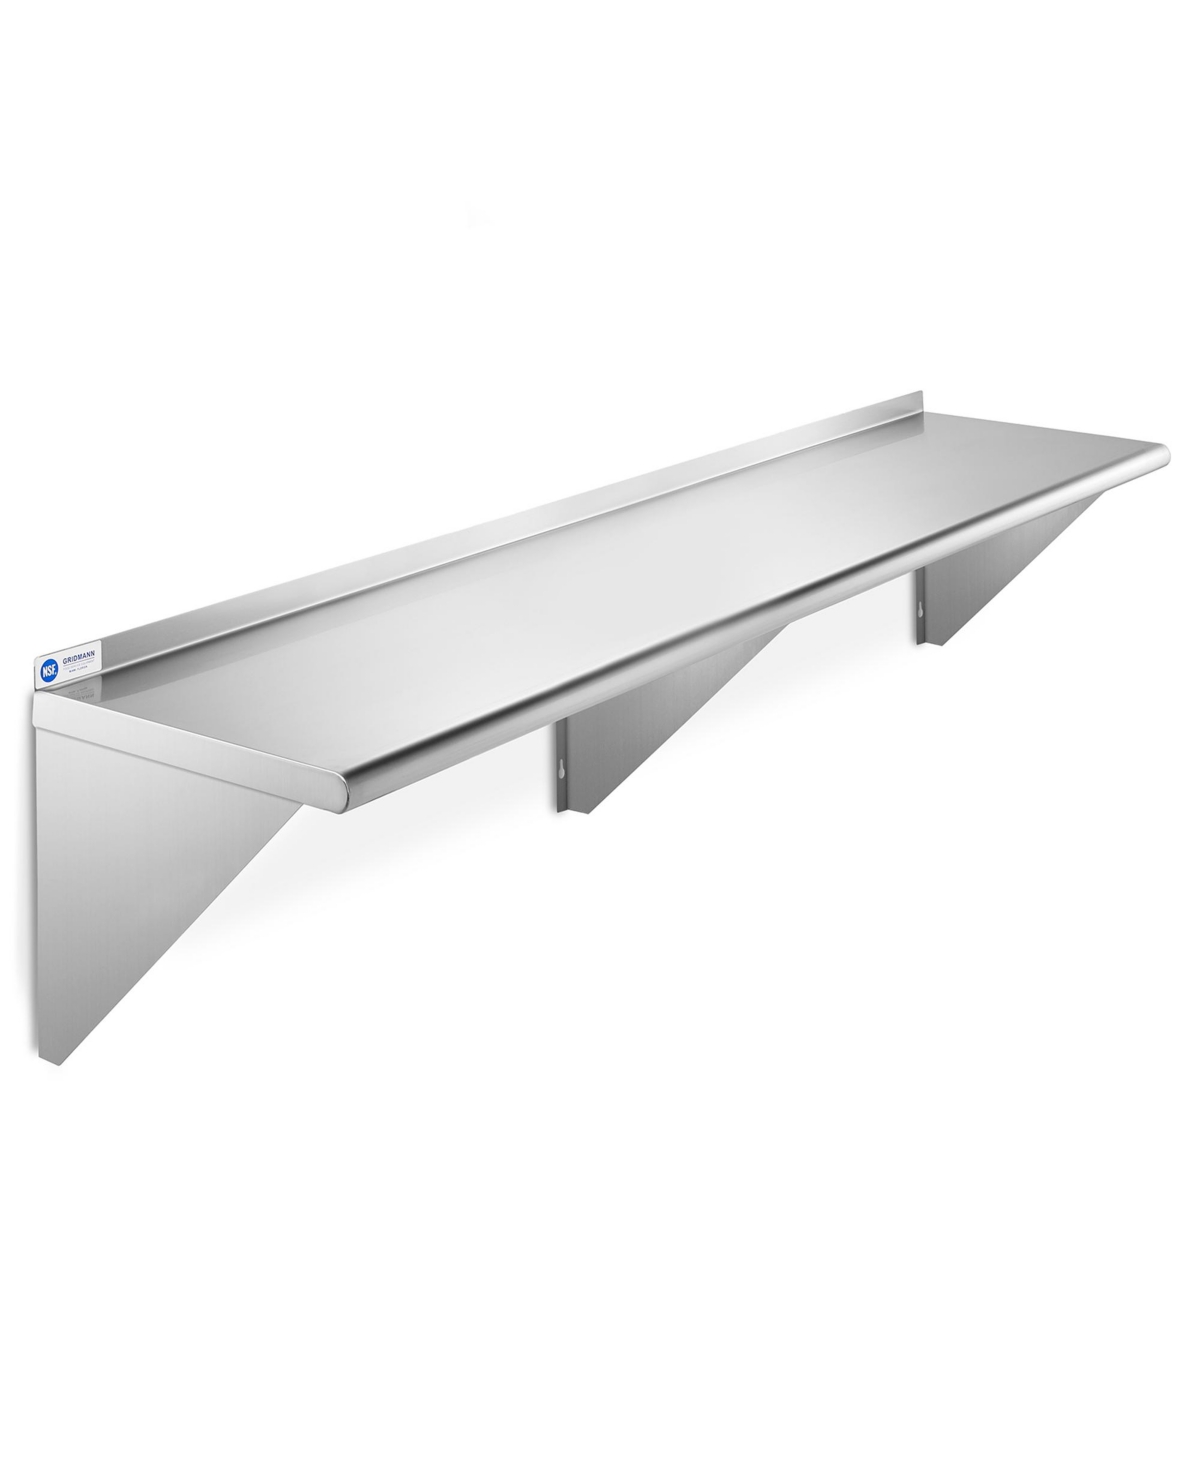 14" x 72" Nsf Stainless Steel Kitchen Wall Mount Shelf w/ Backsplash - Silver